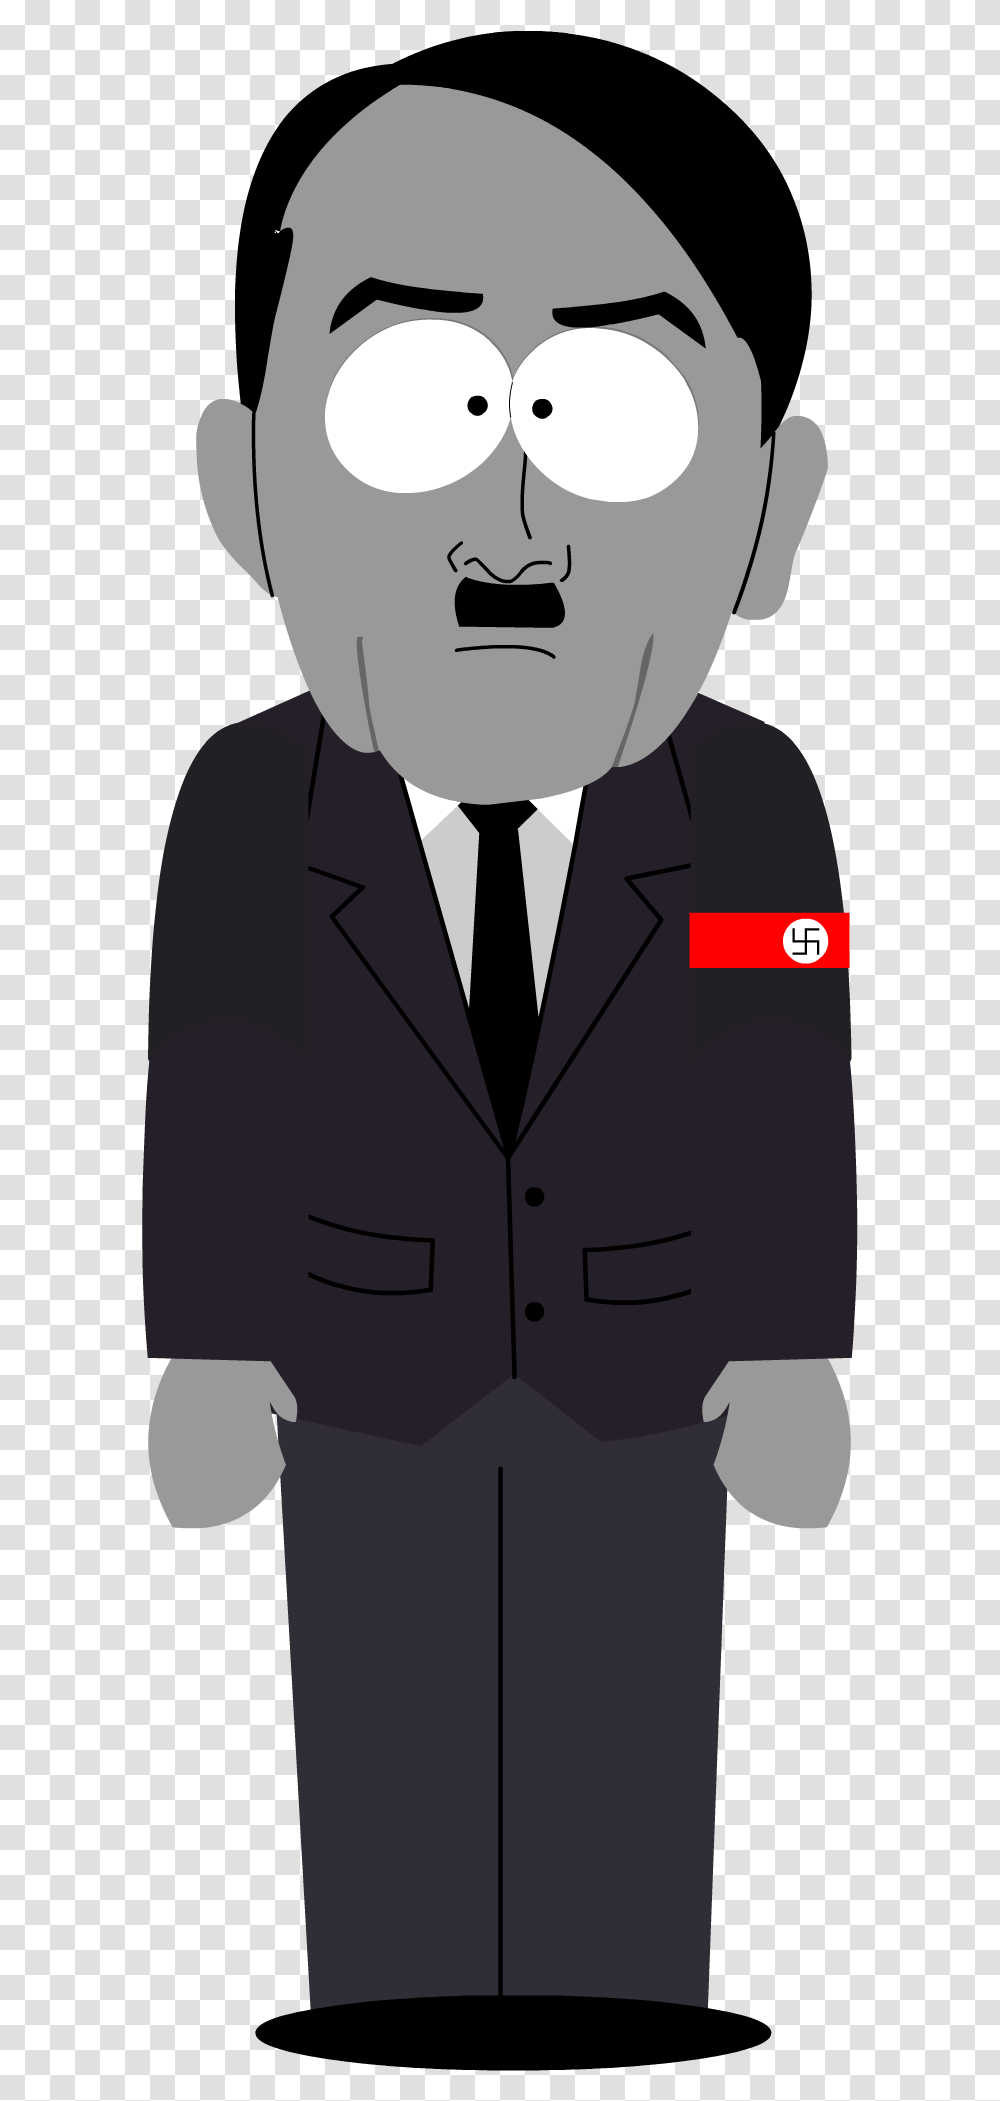 Hitler Image Background Cartoon Hitler, Clothing, Apparel, Suit, Overcoat Transparent Png